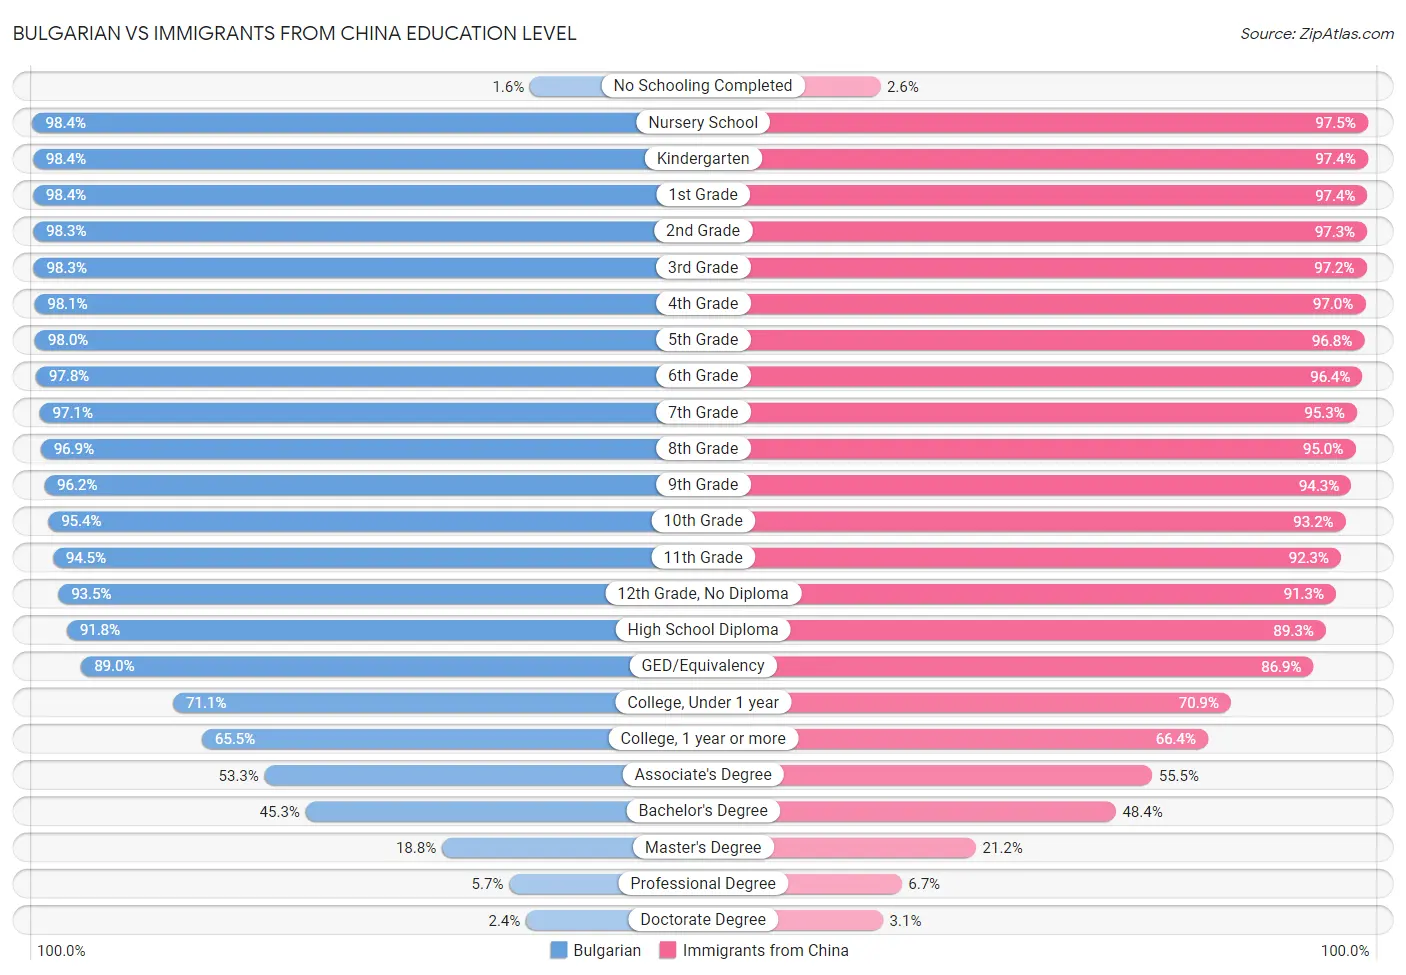 Bulgarian vs Immigrants from China Education Level